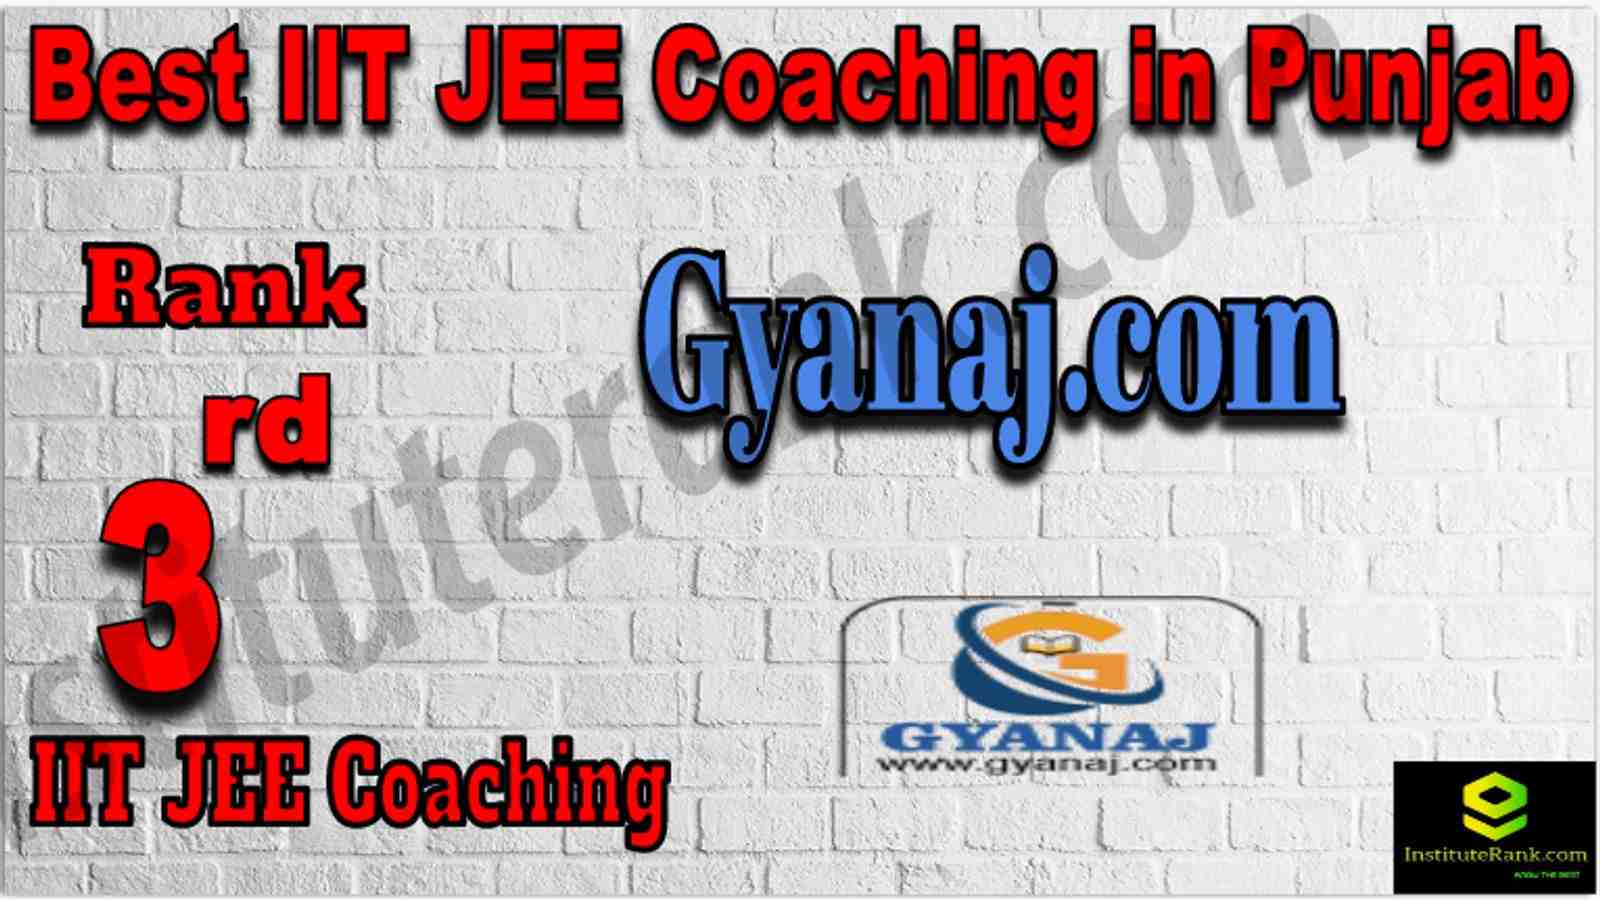 Rank 3rd Best IIT JEE Coaching in Punjab